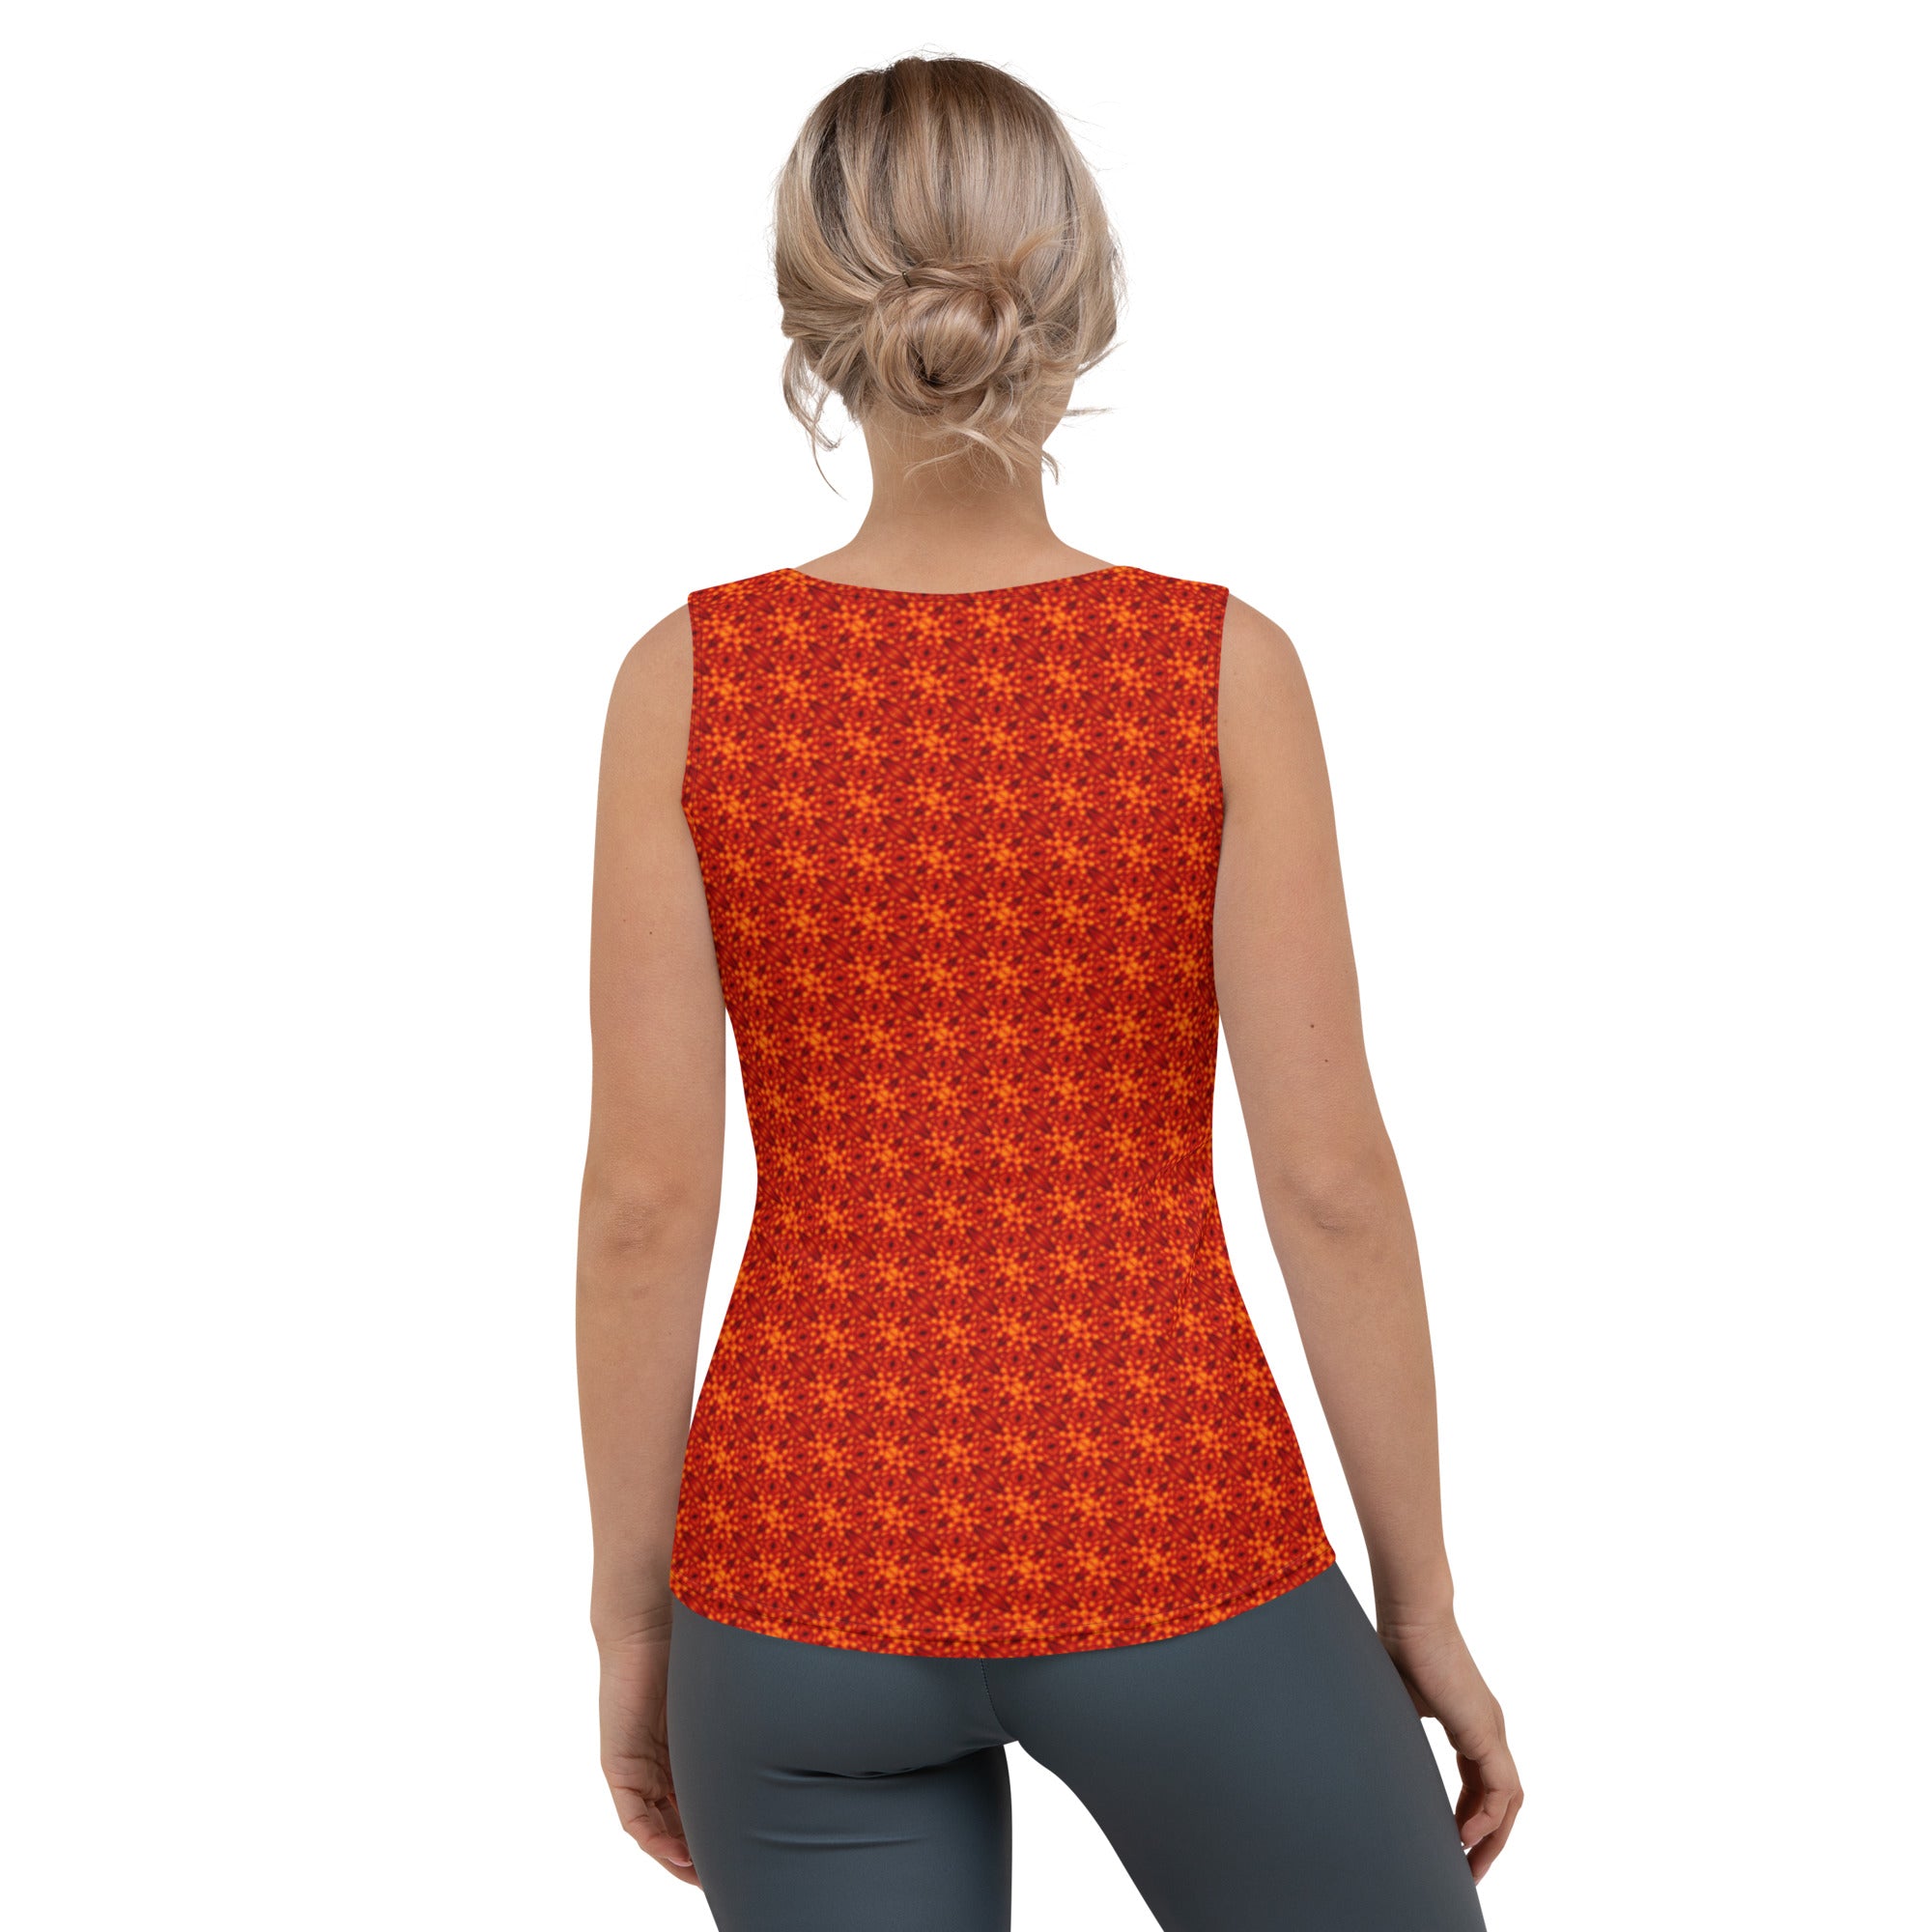 Passionate Orange, figure hugging Sublimation Cut & Sew Tank Top, by Sensus Studio Design